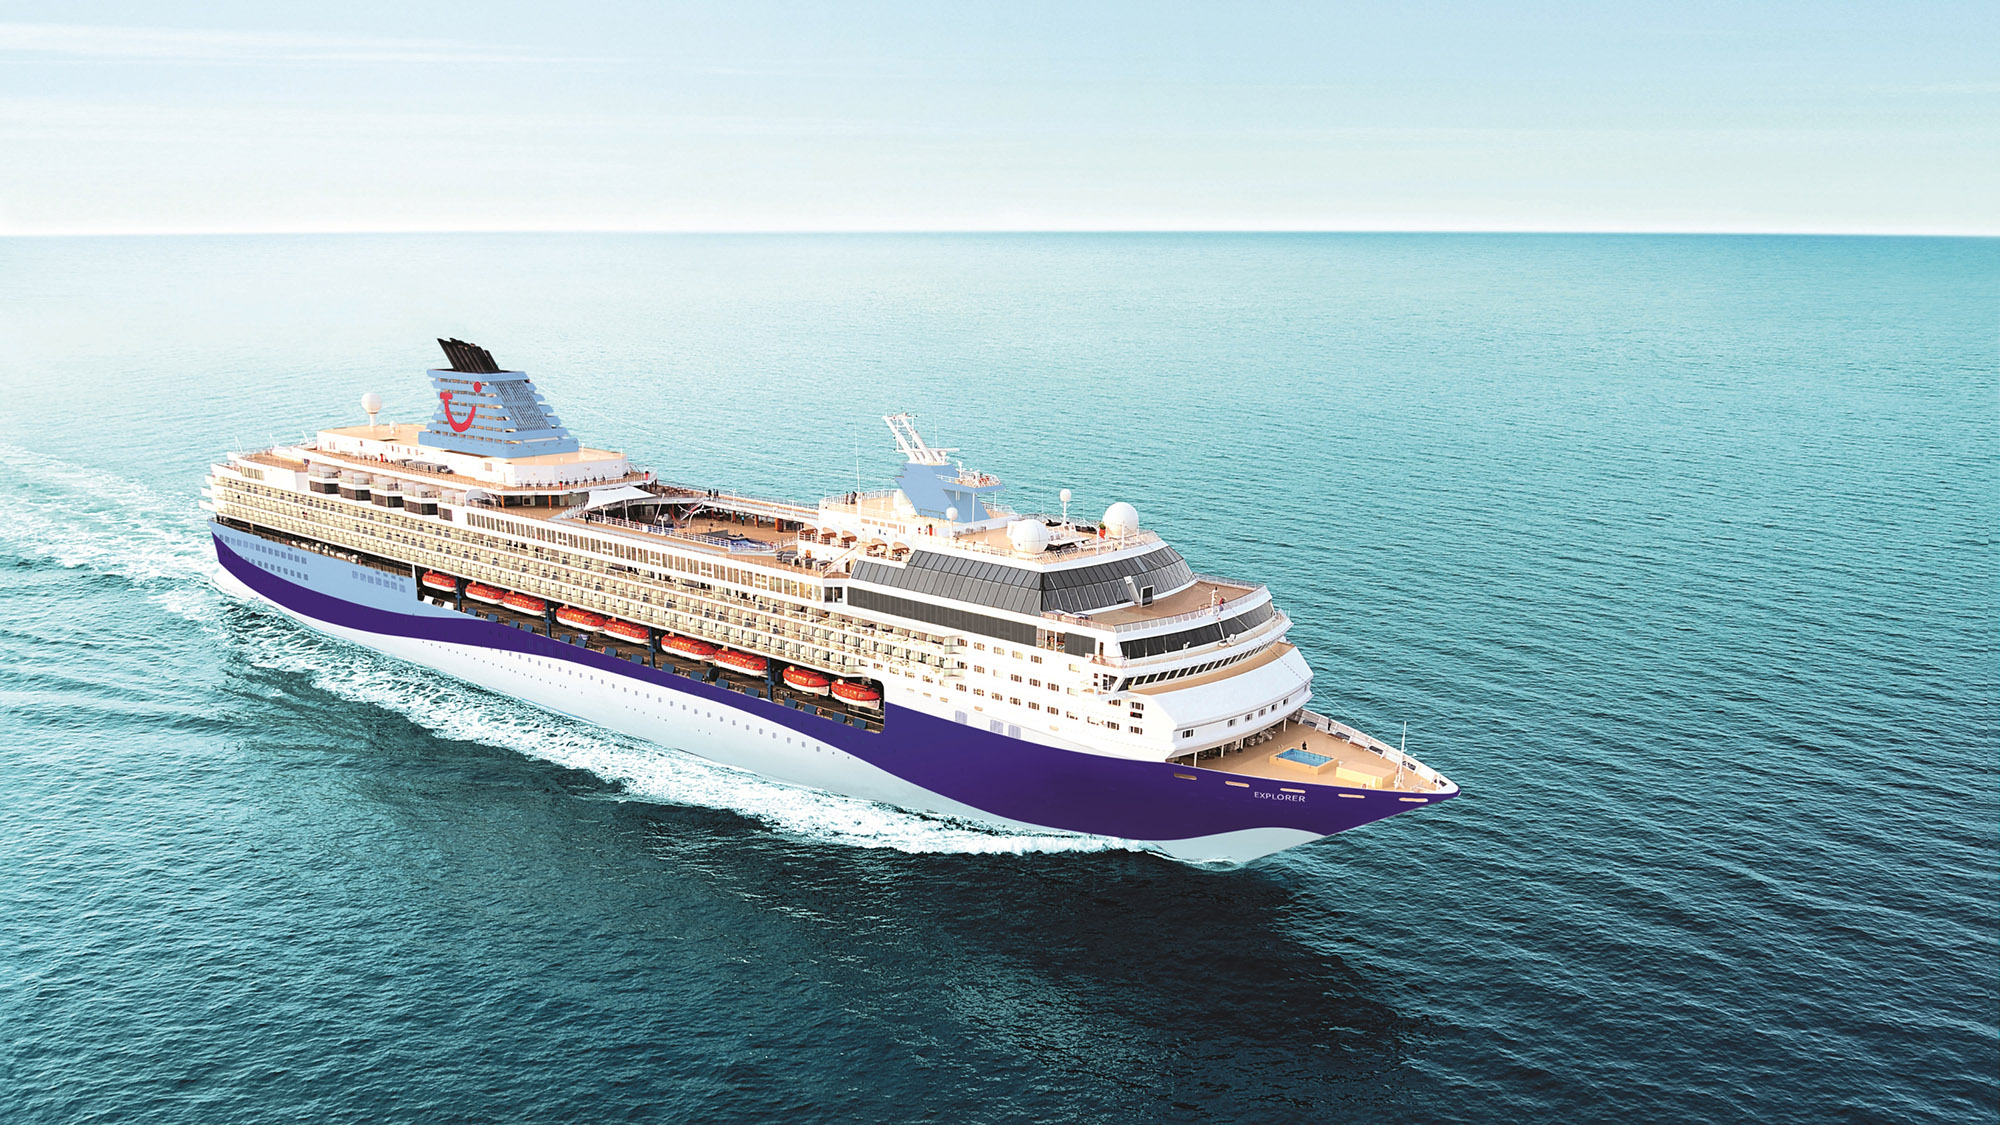 WorldofCruising: Win A 7-night ocean cruise to the fabulous Mediterranean